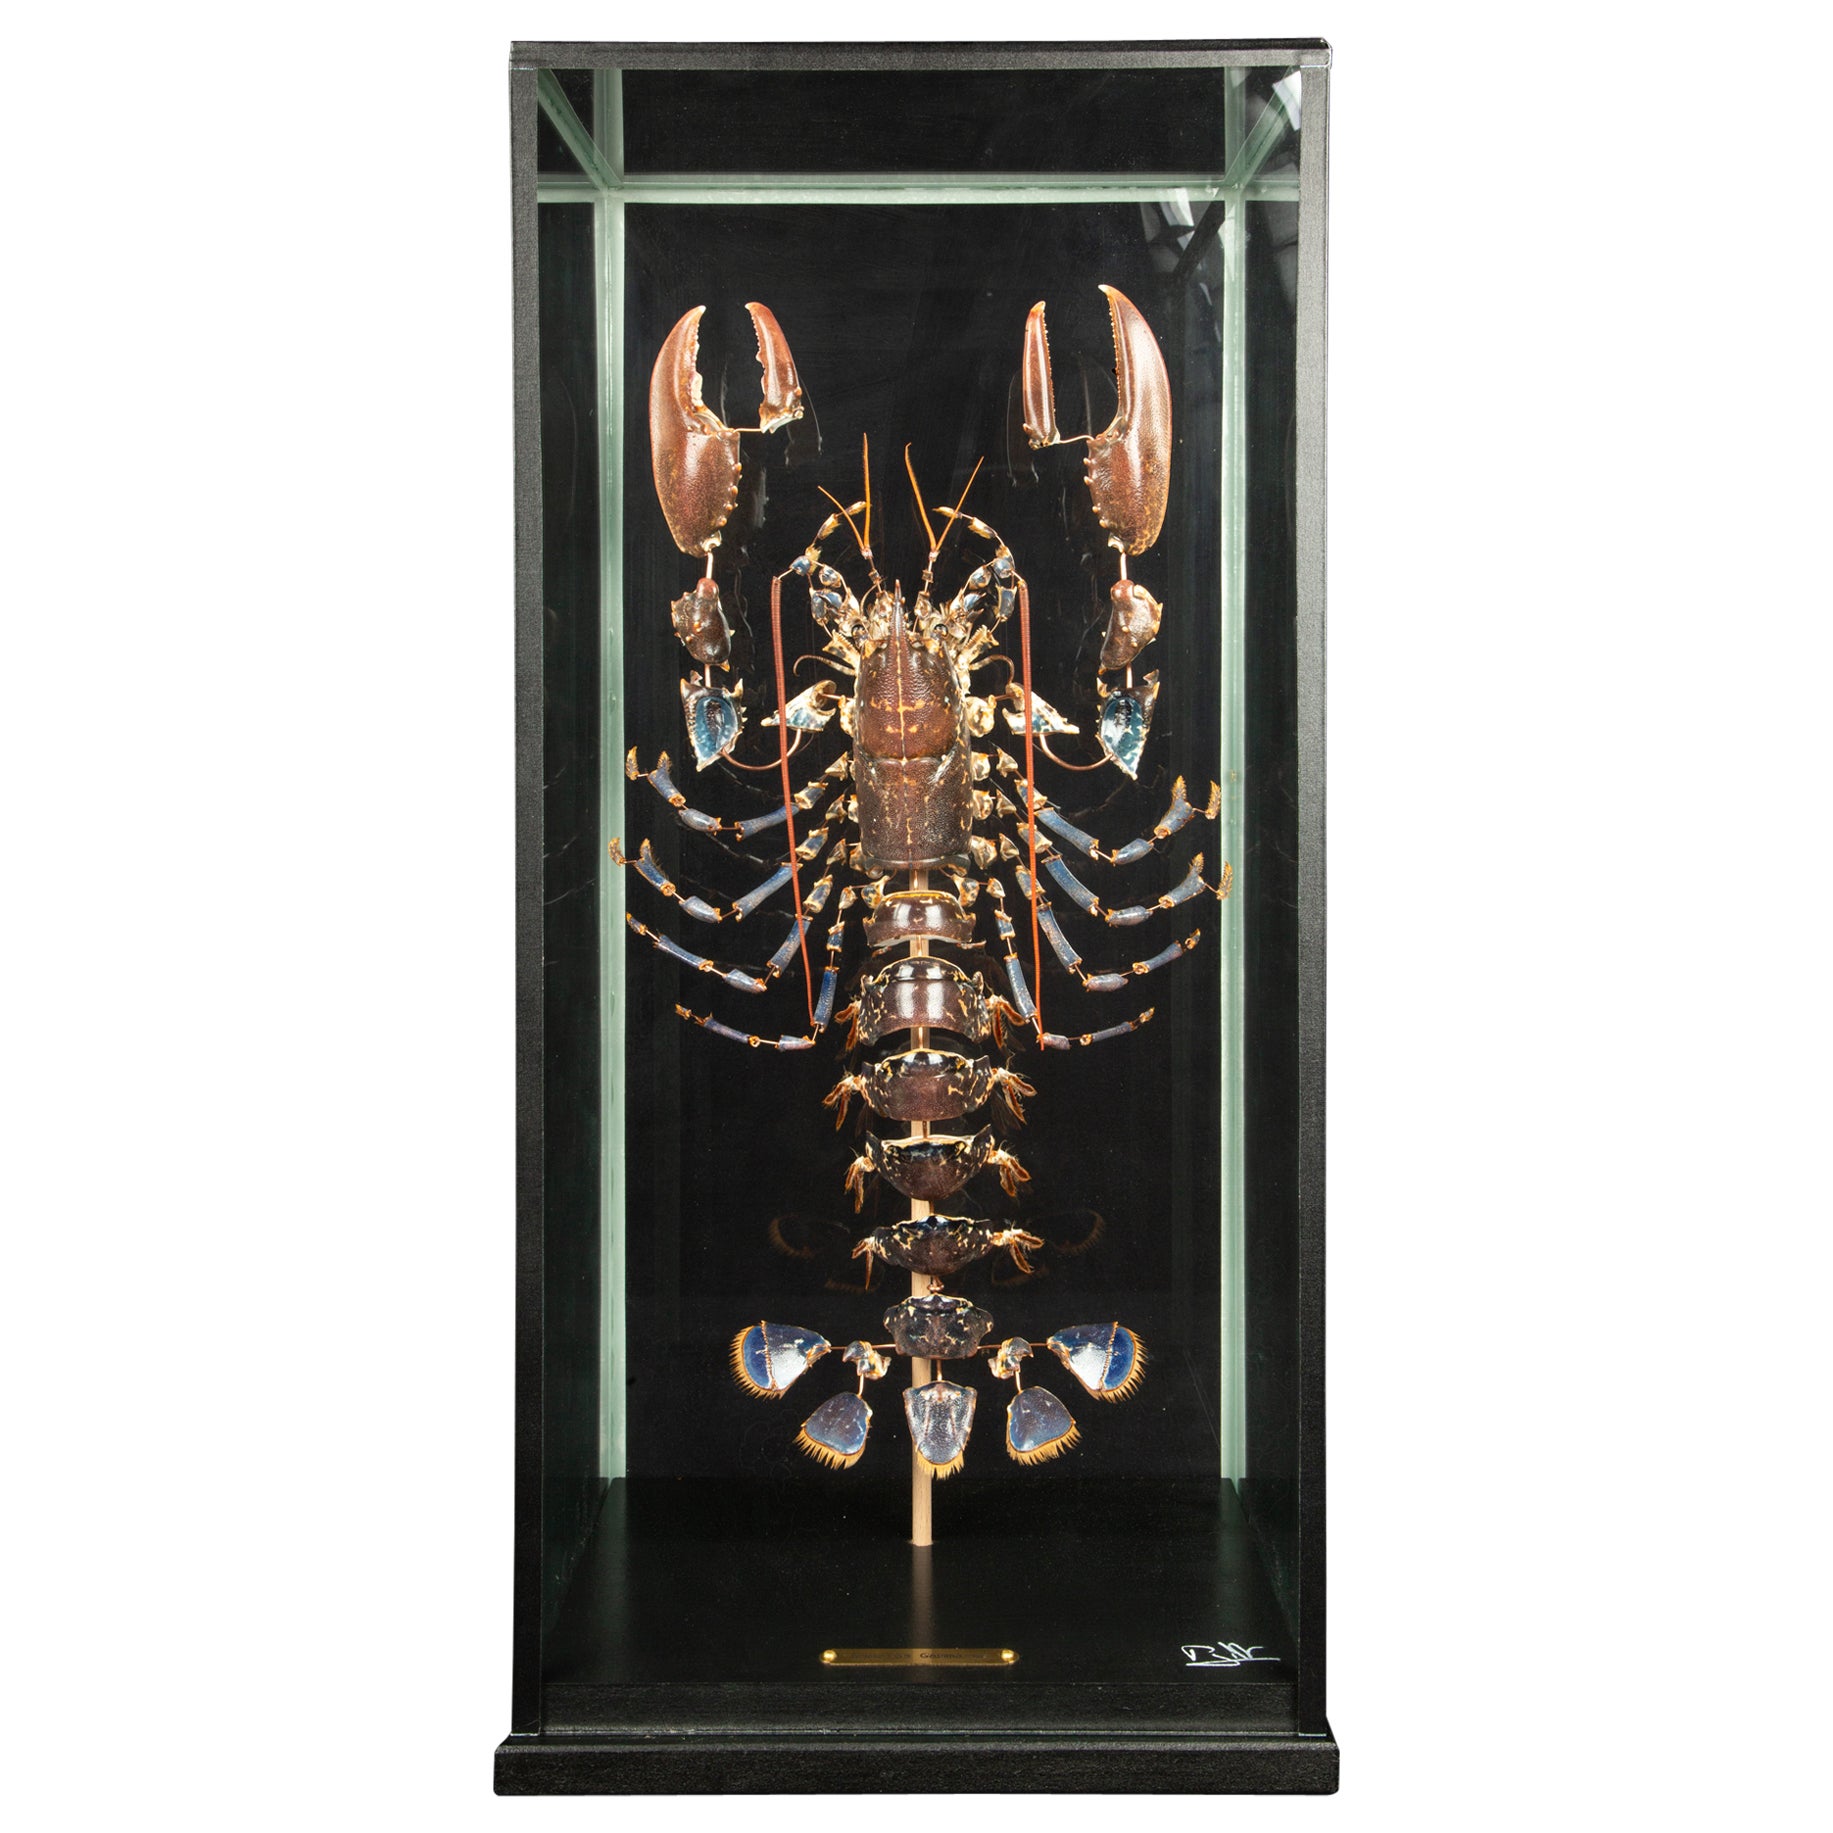 Deconstructed European Lobster (Homarus Gammarus) Under Custom Glass Case